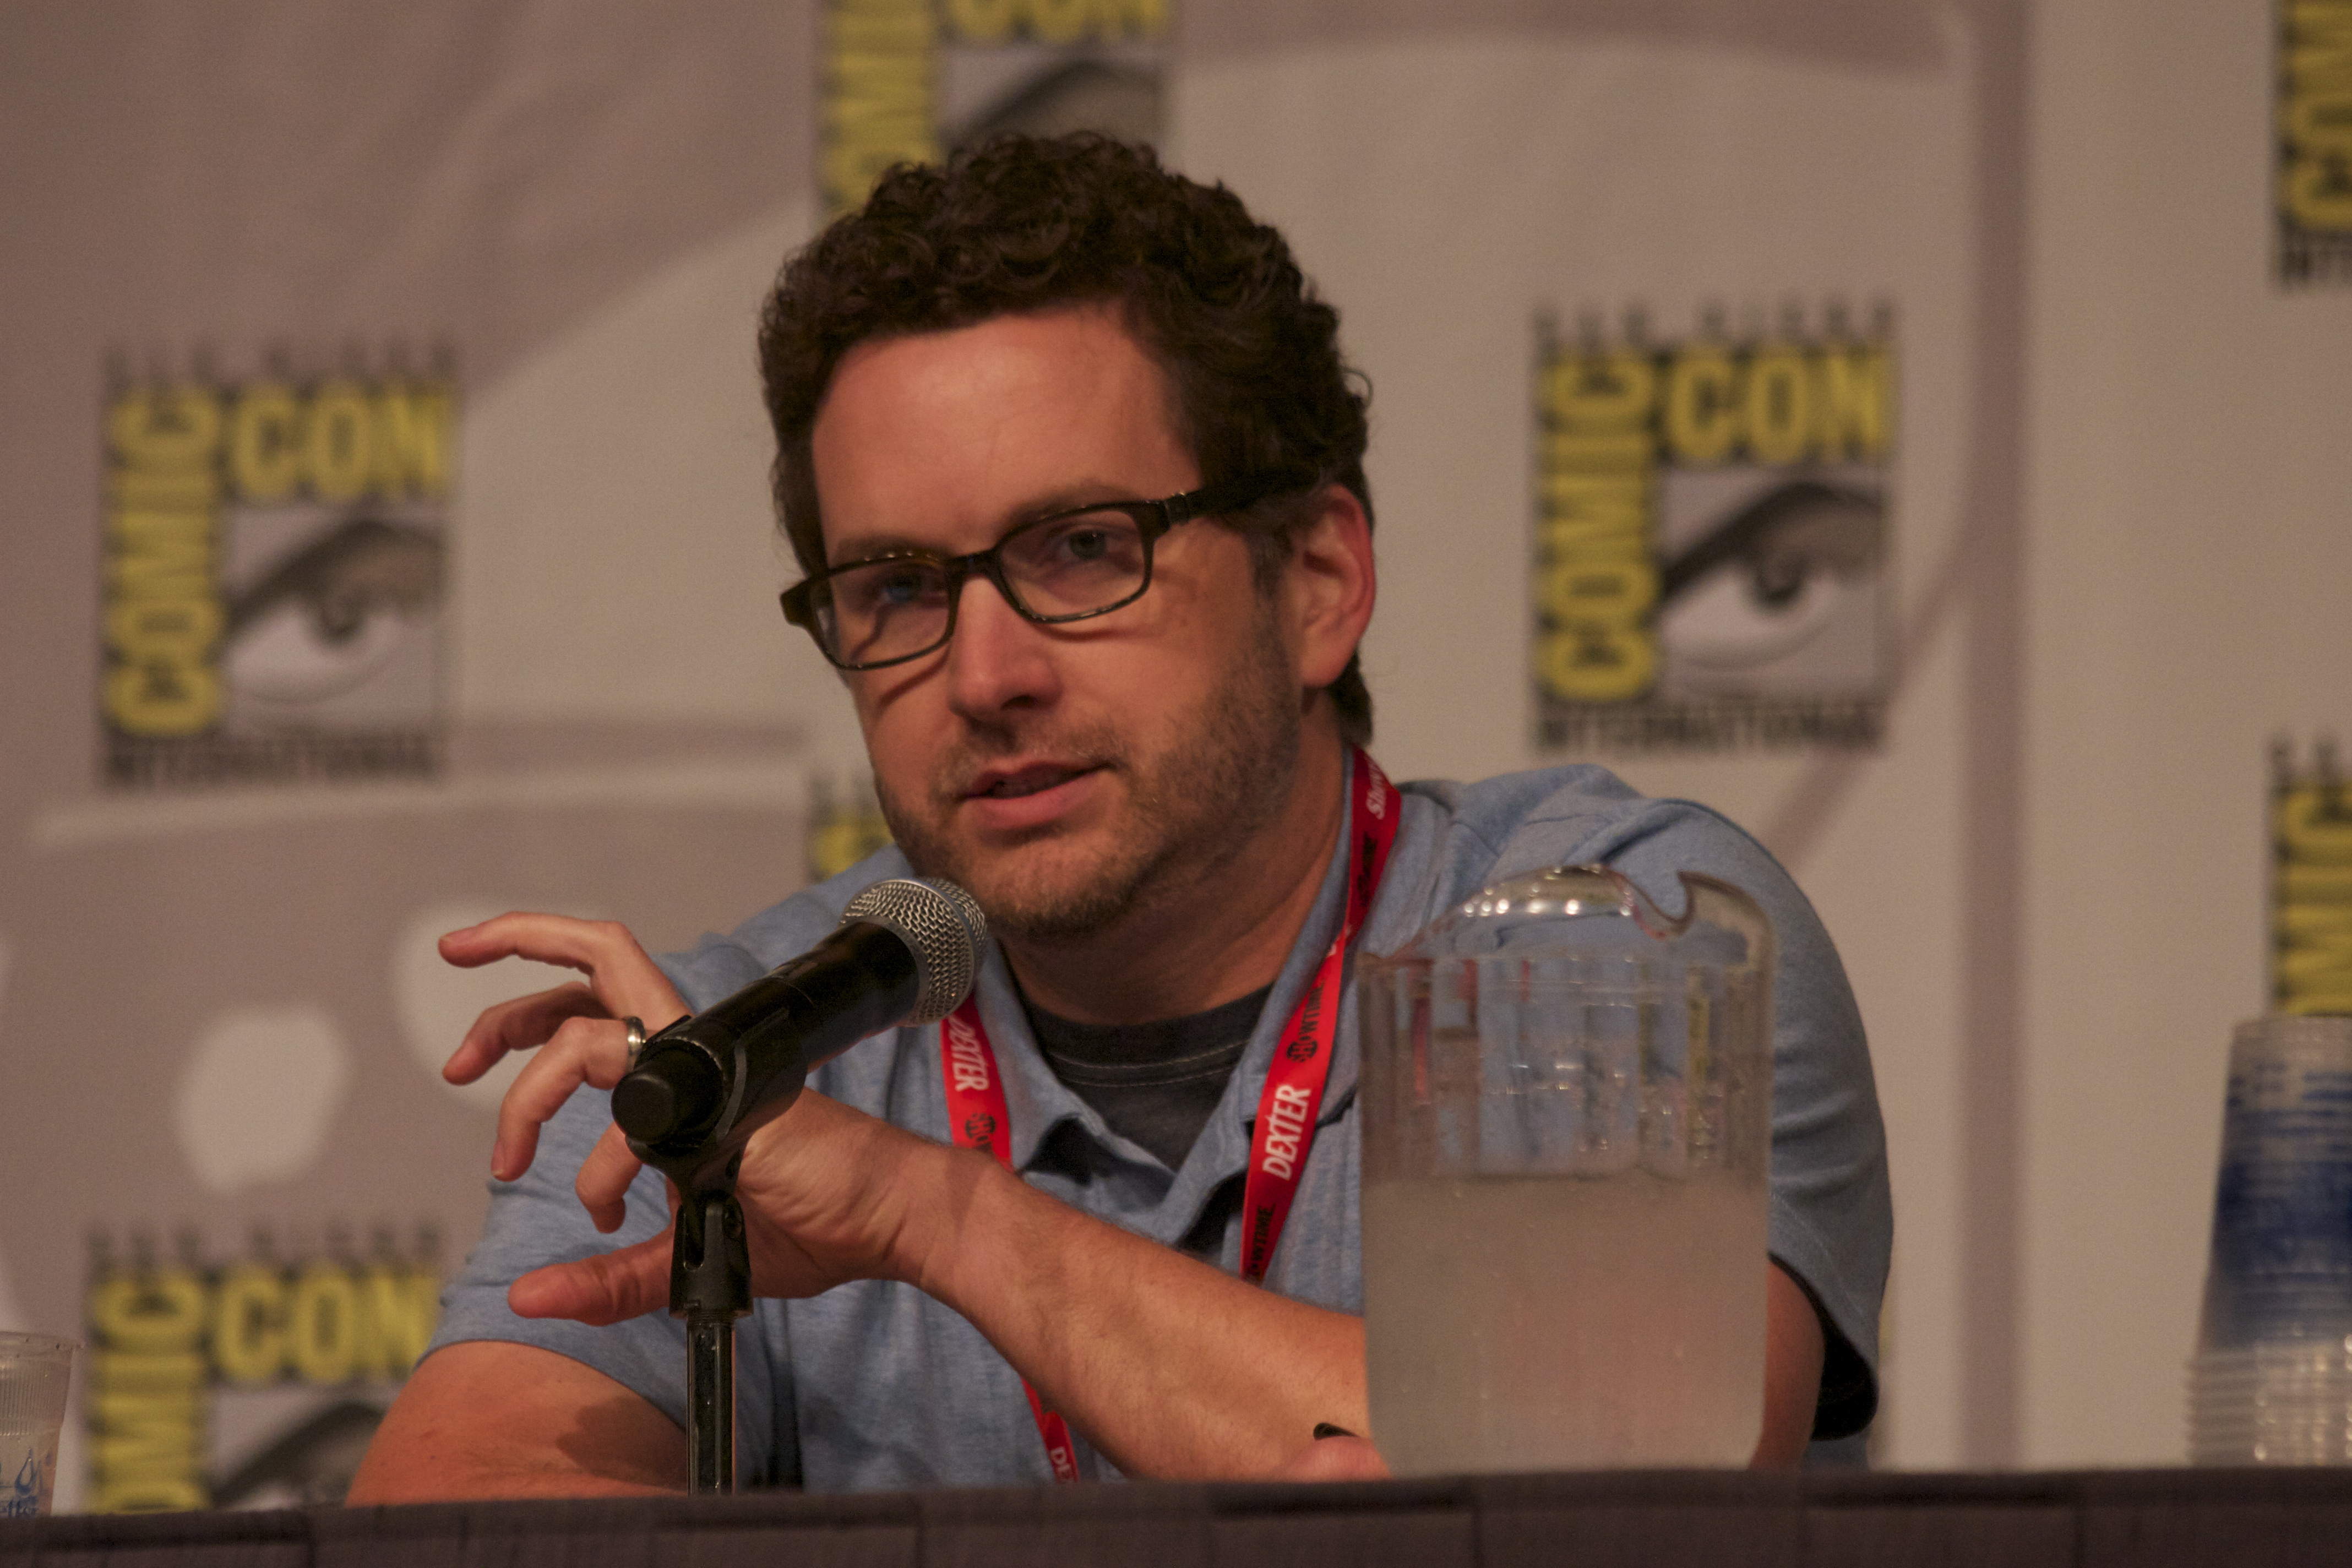 Burnie Burns at San Diego ComicCon International 2011